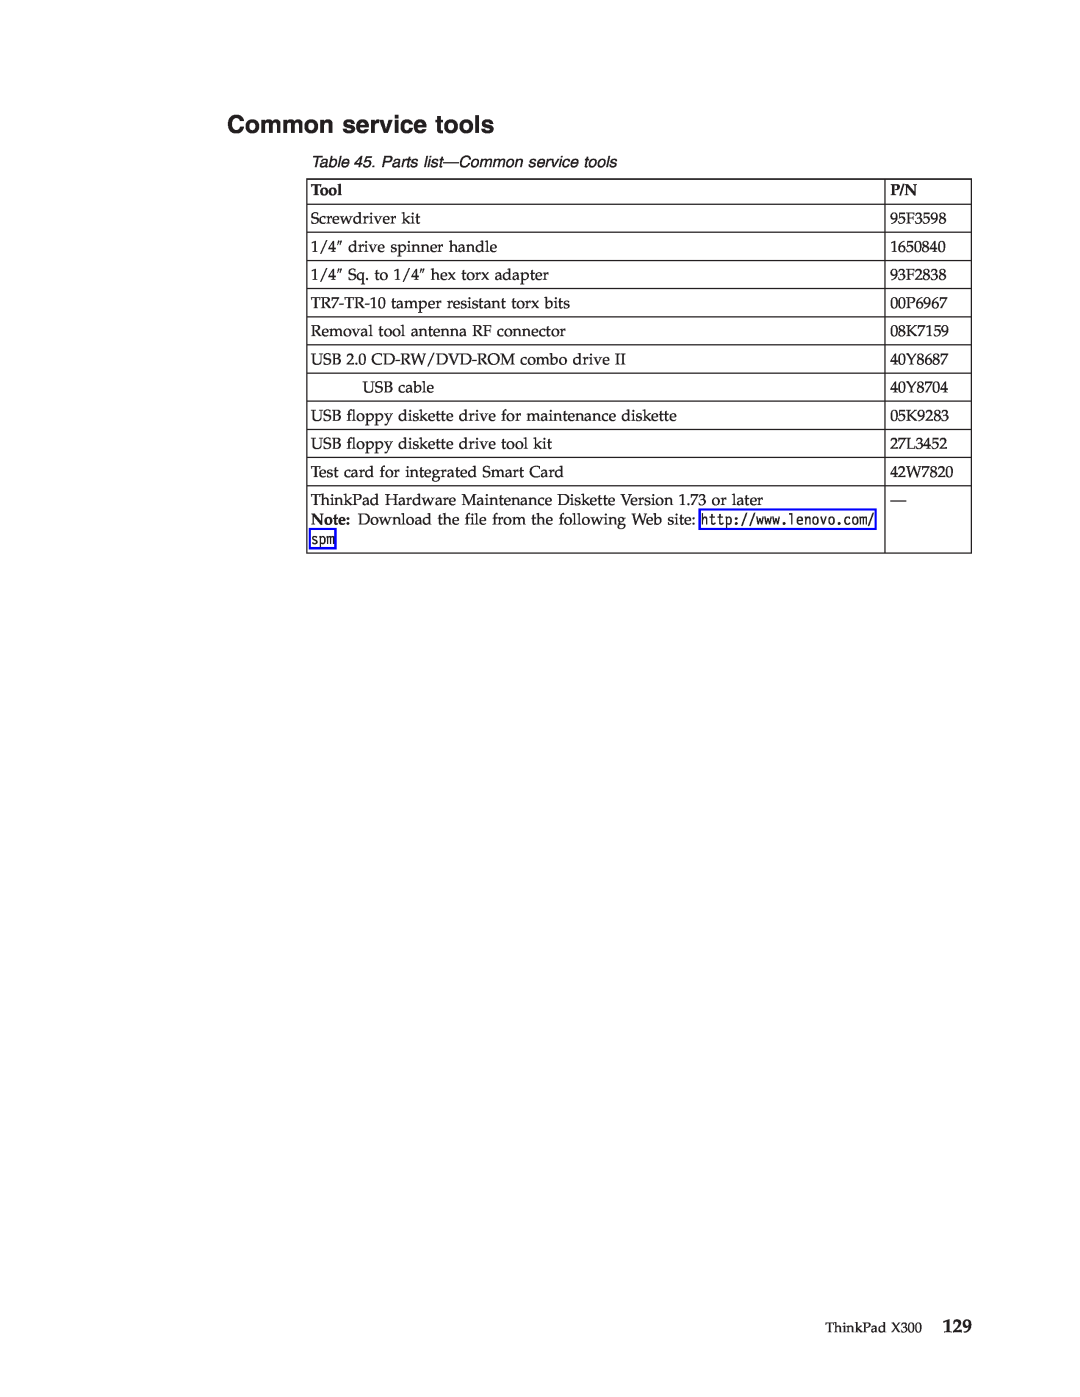 Lenovo X300 manual Parts list-Common service tools 